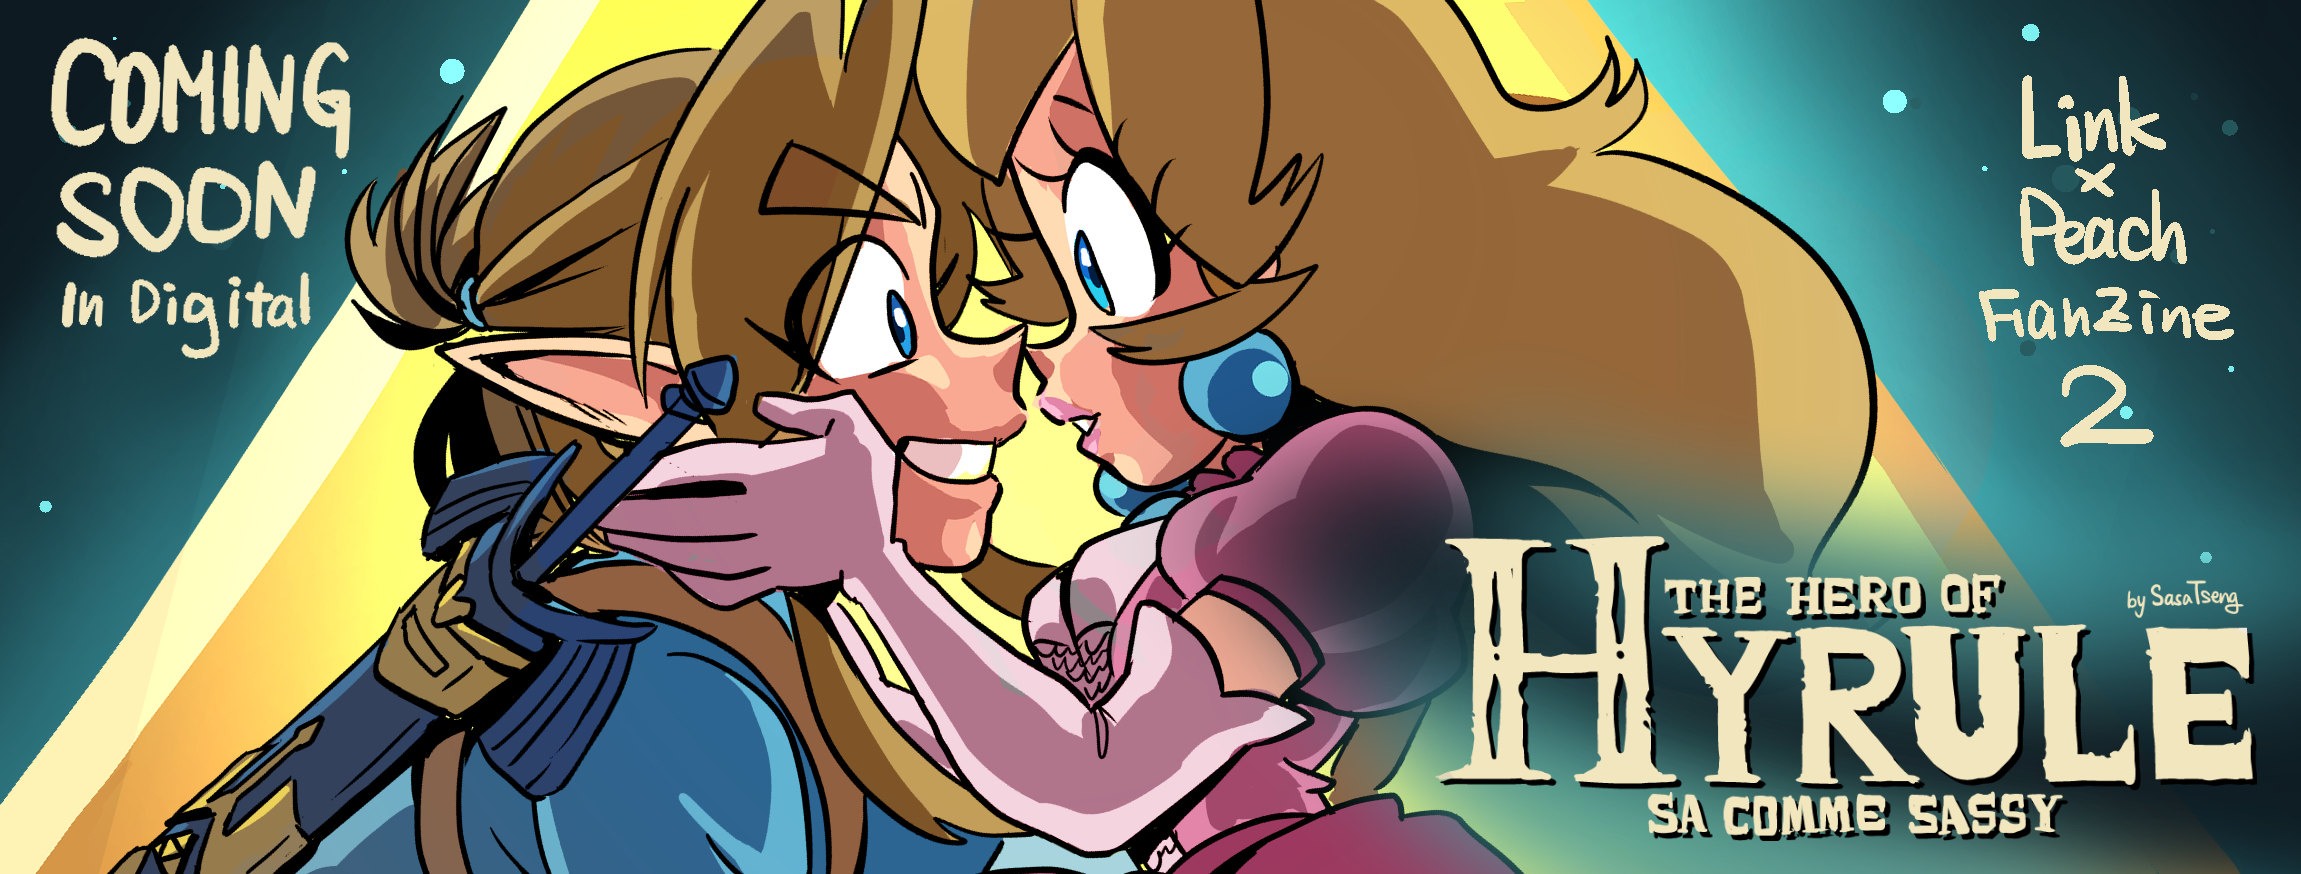 The Hero of Hyrule: Link X Peach fanzine 2 